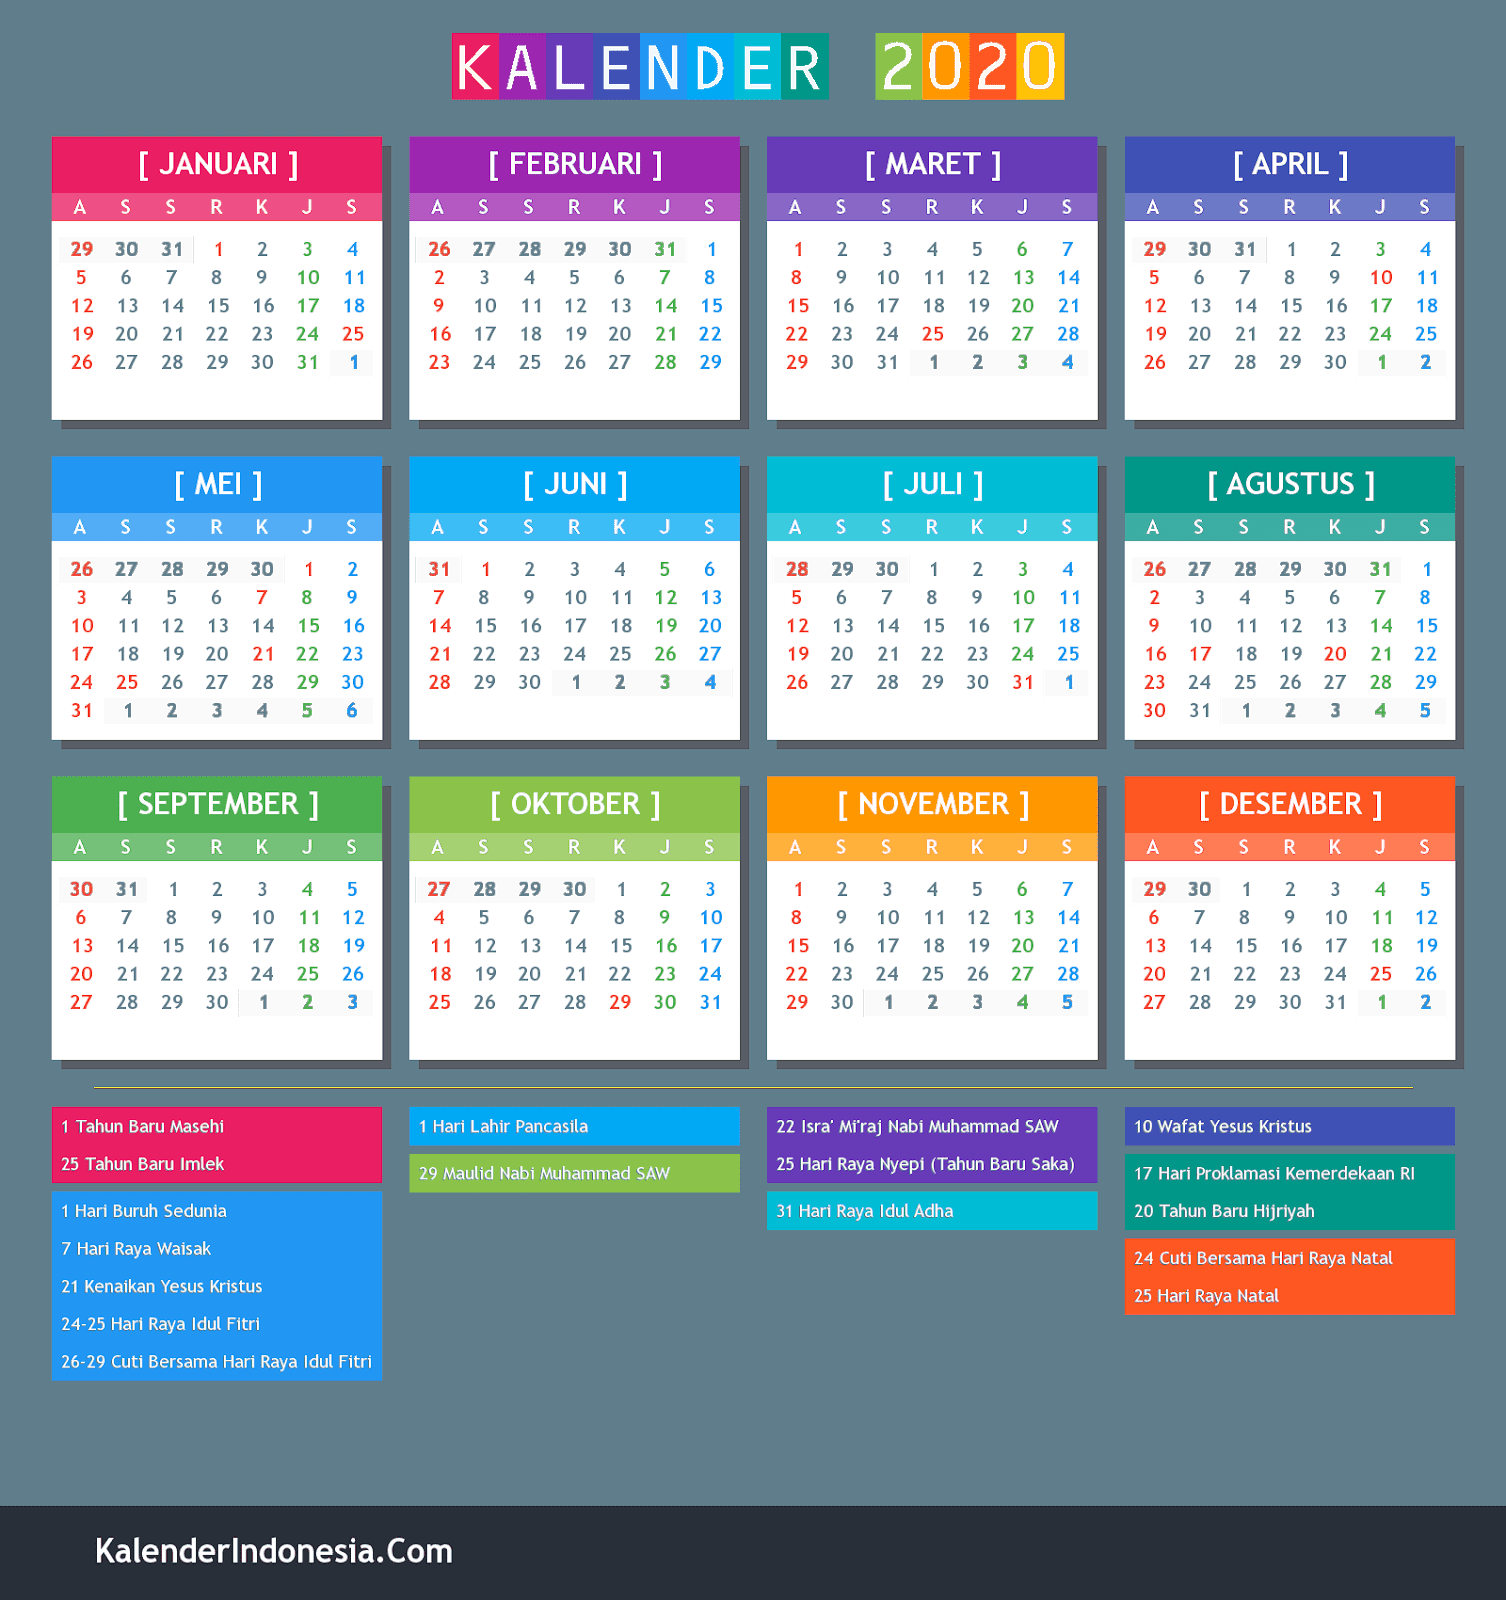 Kalender Indonesia 2020 - Kalender Indonesia